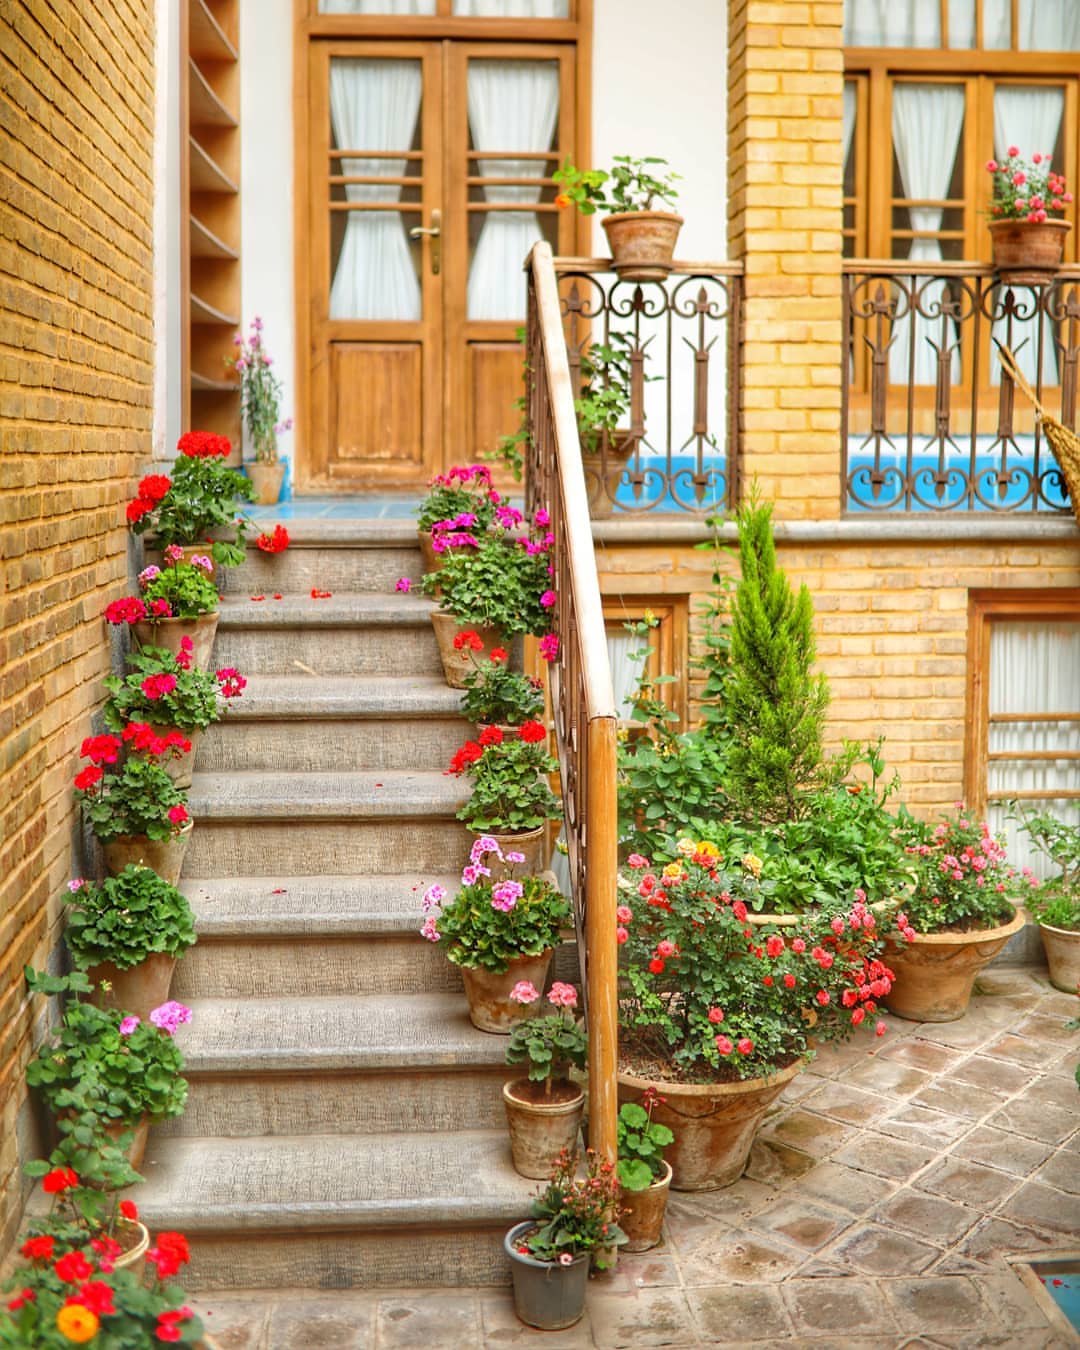 General 1080x1350 Iran stairs flowerpot bricks